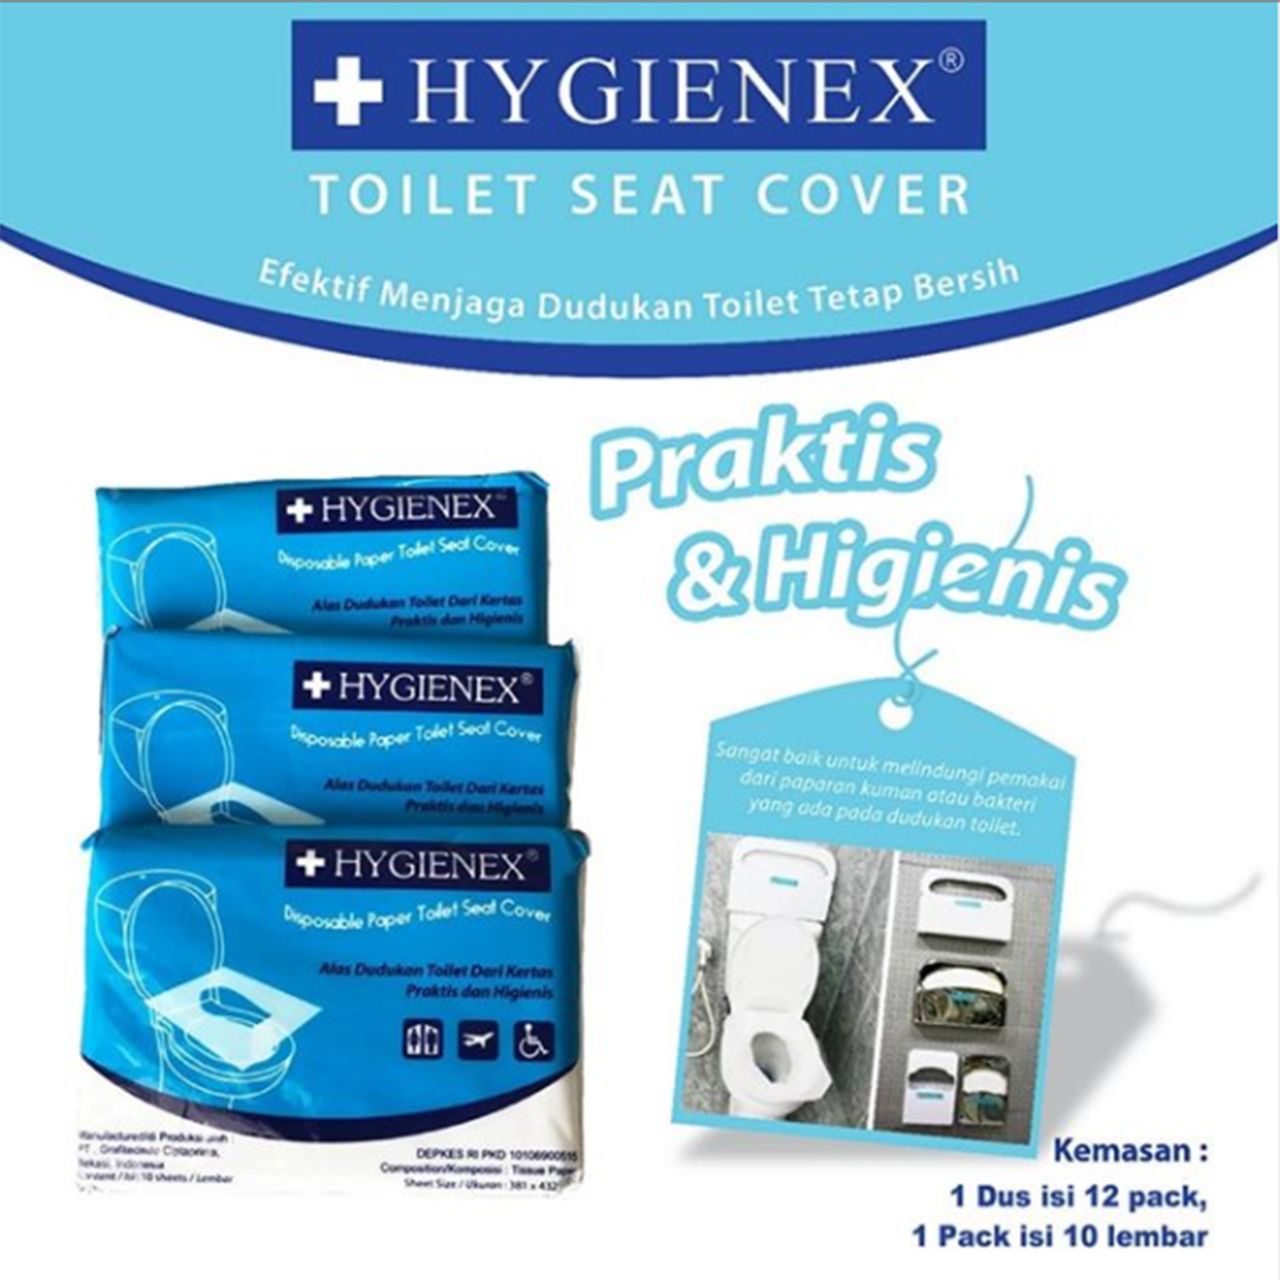 toilet seat cover hygienex